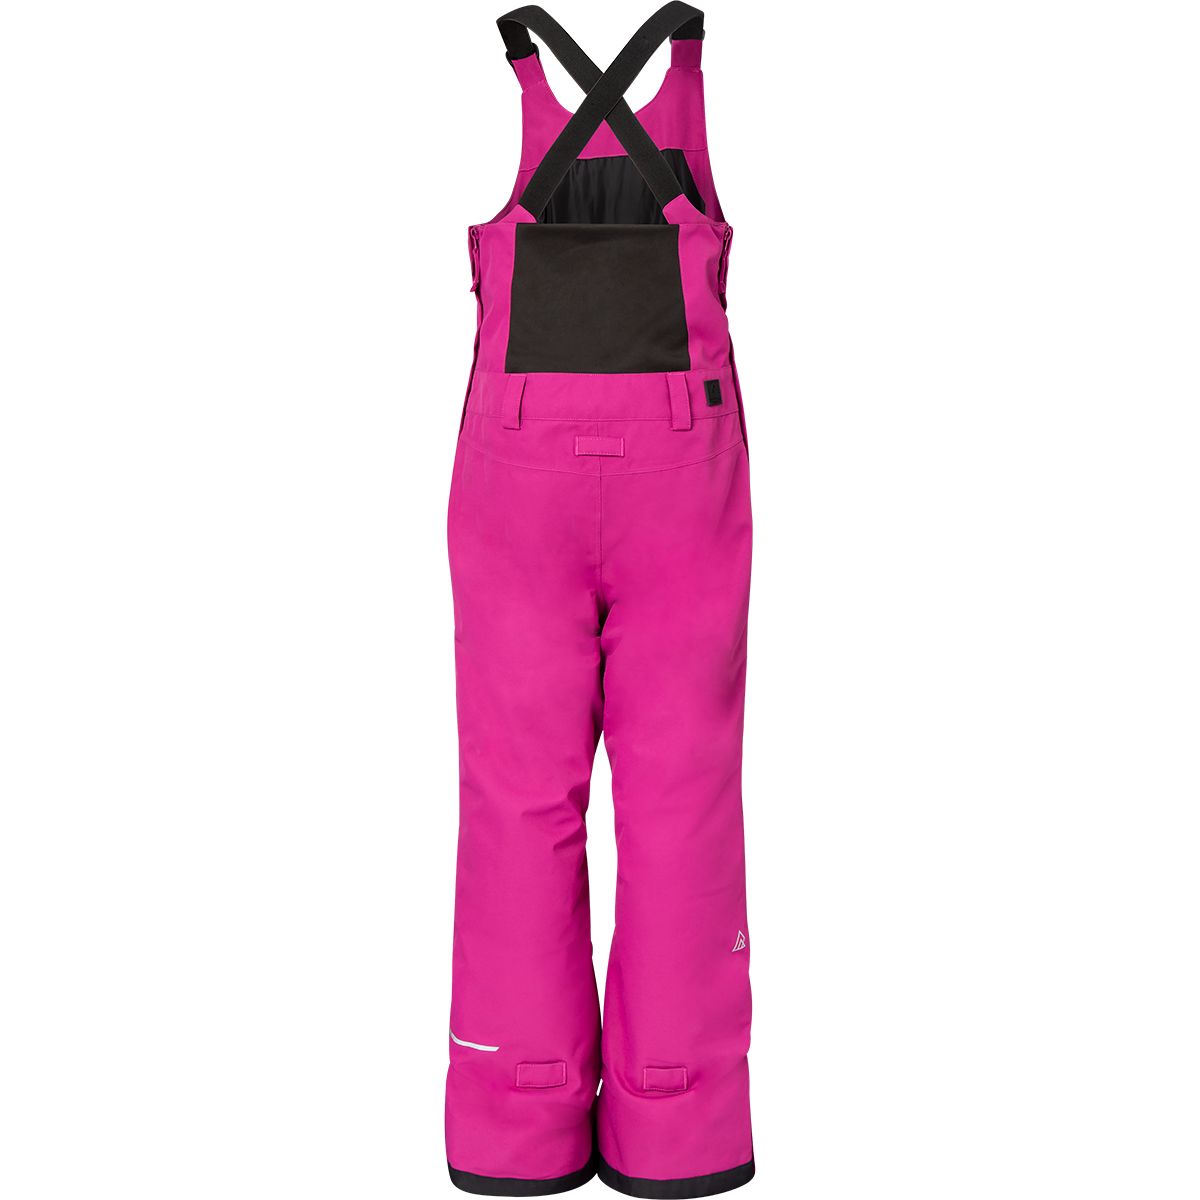 32 Degrees Heat Snow Pants, Purple, Kid Size M 10/12 - baby & kid stuff -  by owner - craigslist